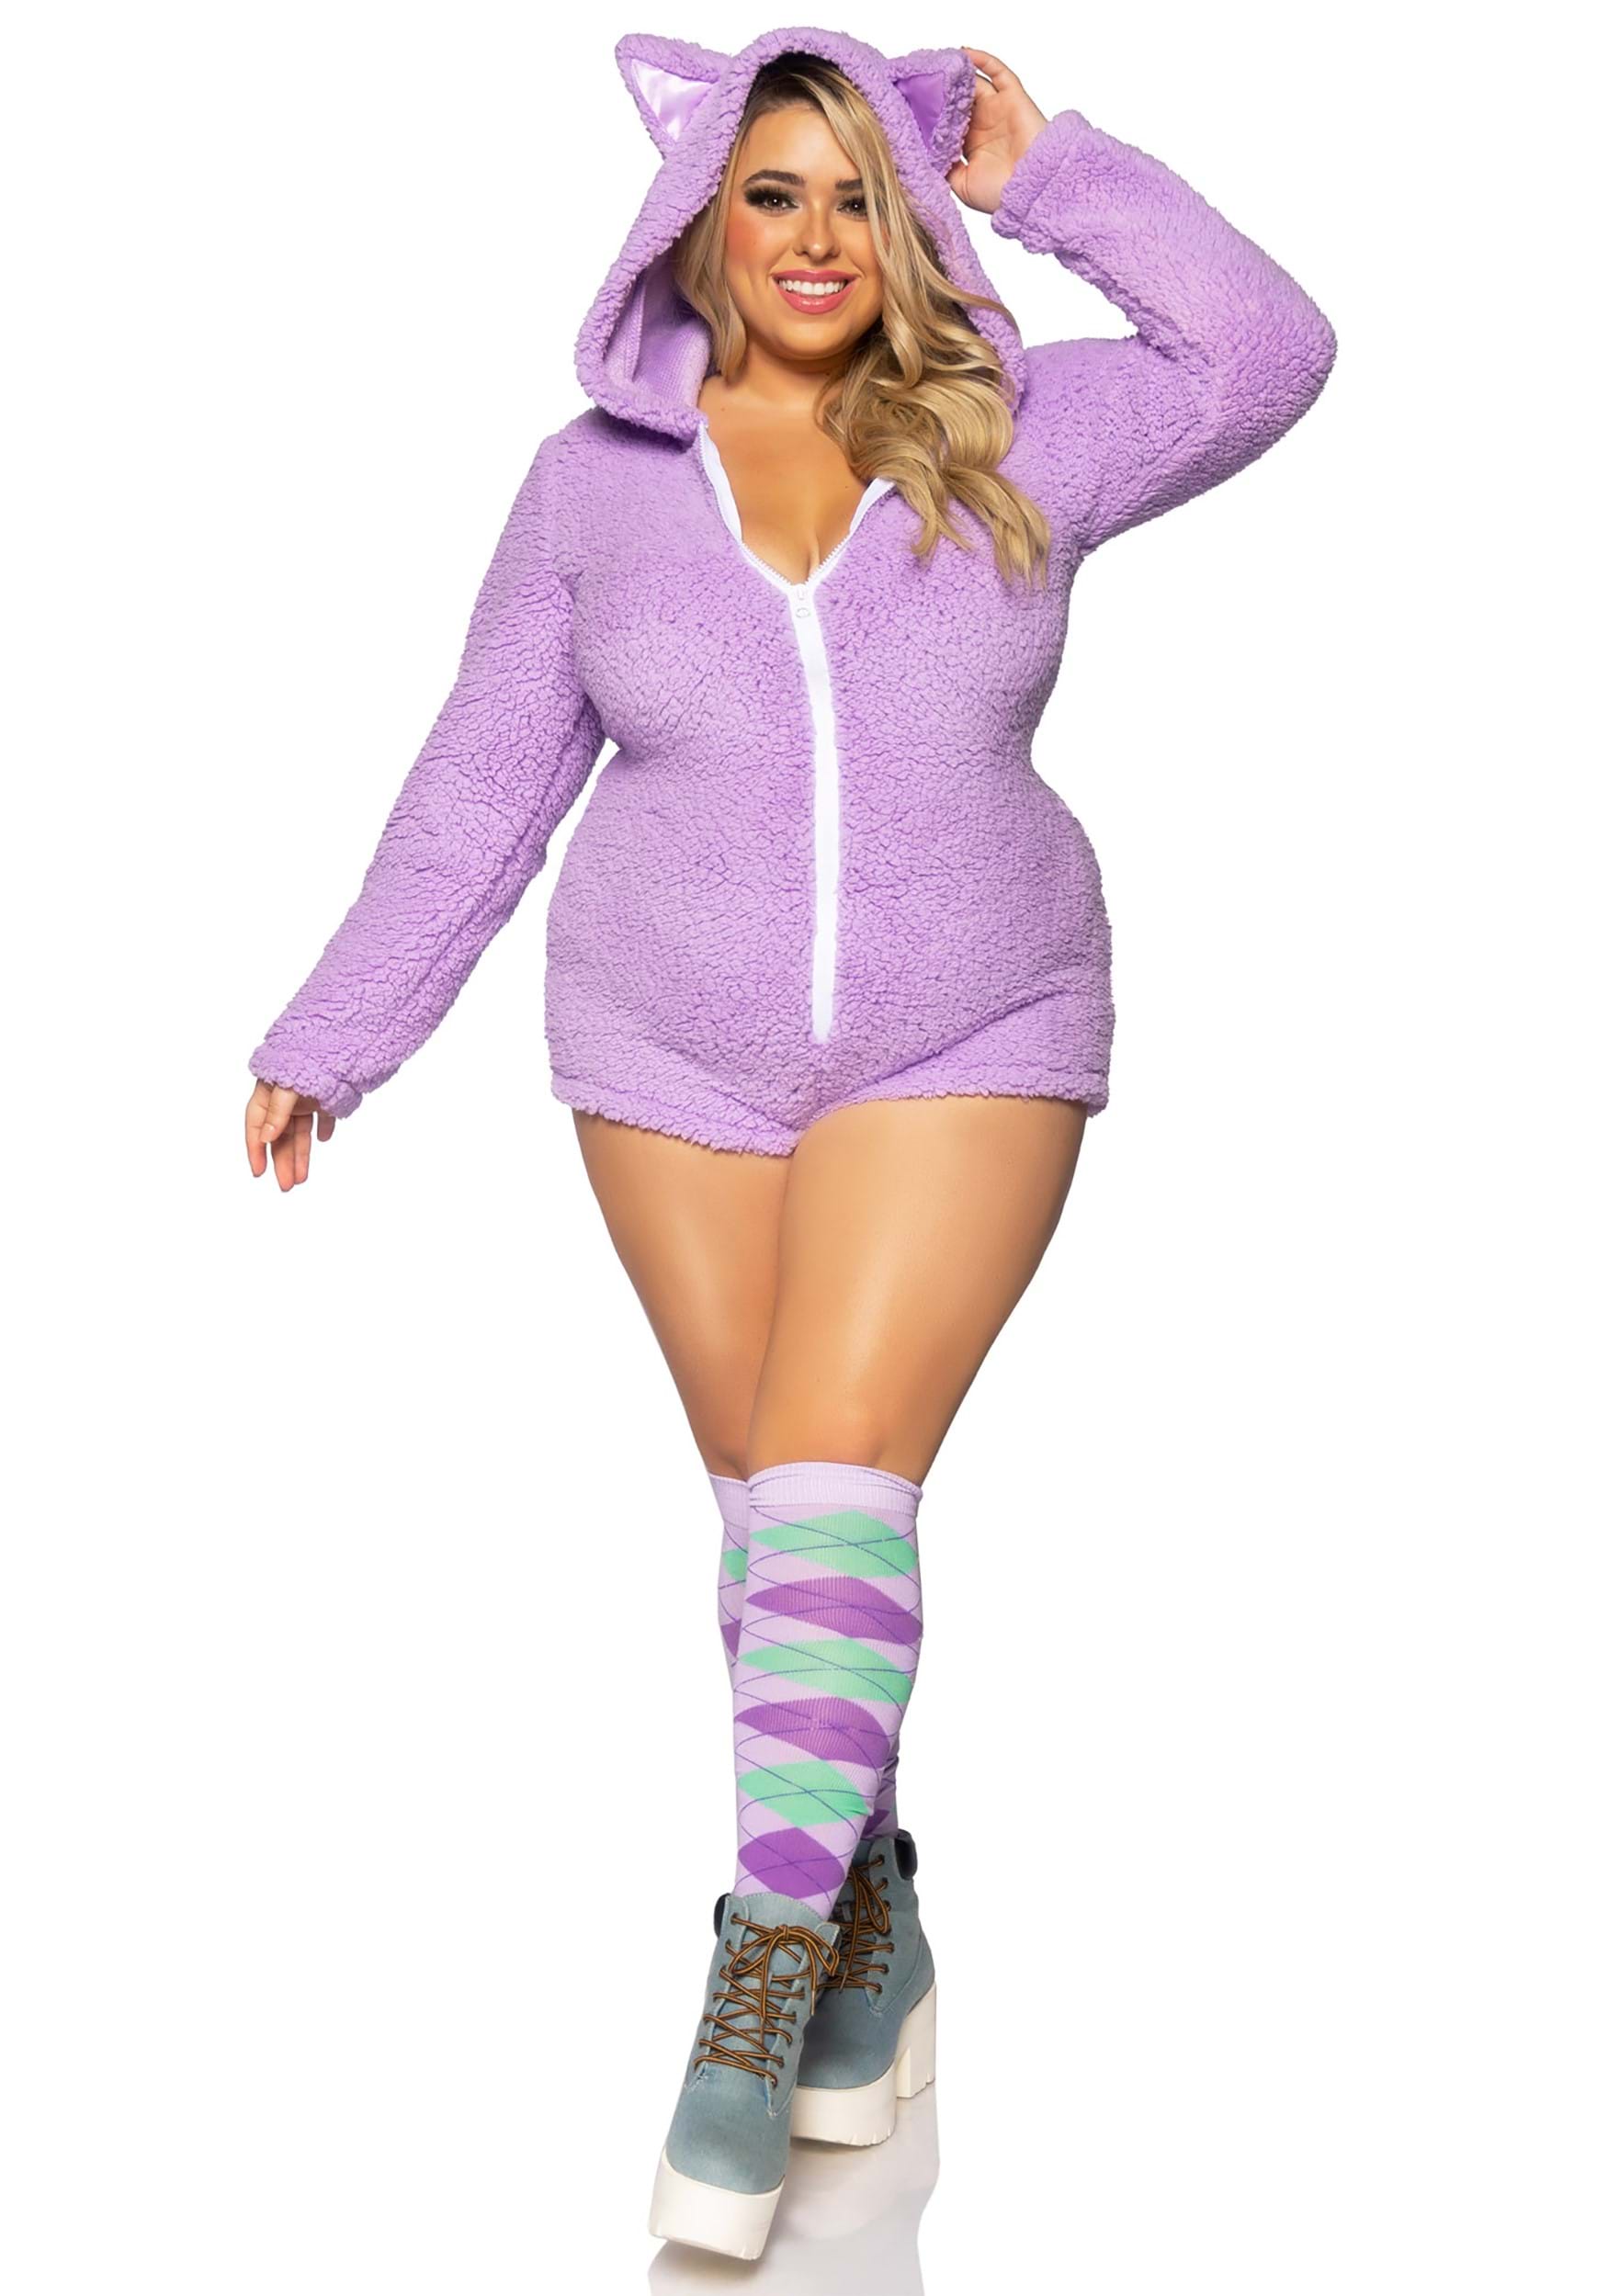 Women’s Sexy Plus Size Purple Cuddle Cat Costume